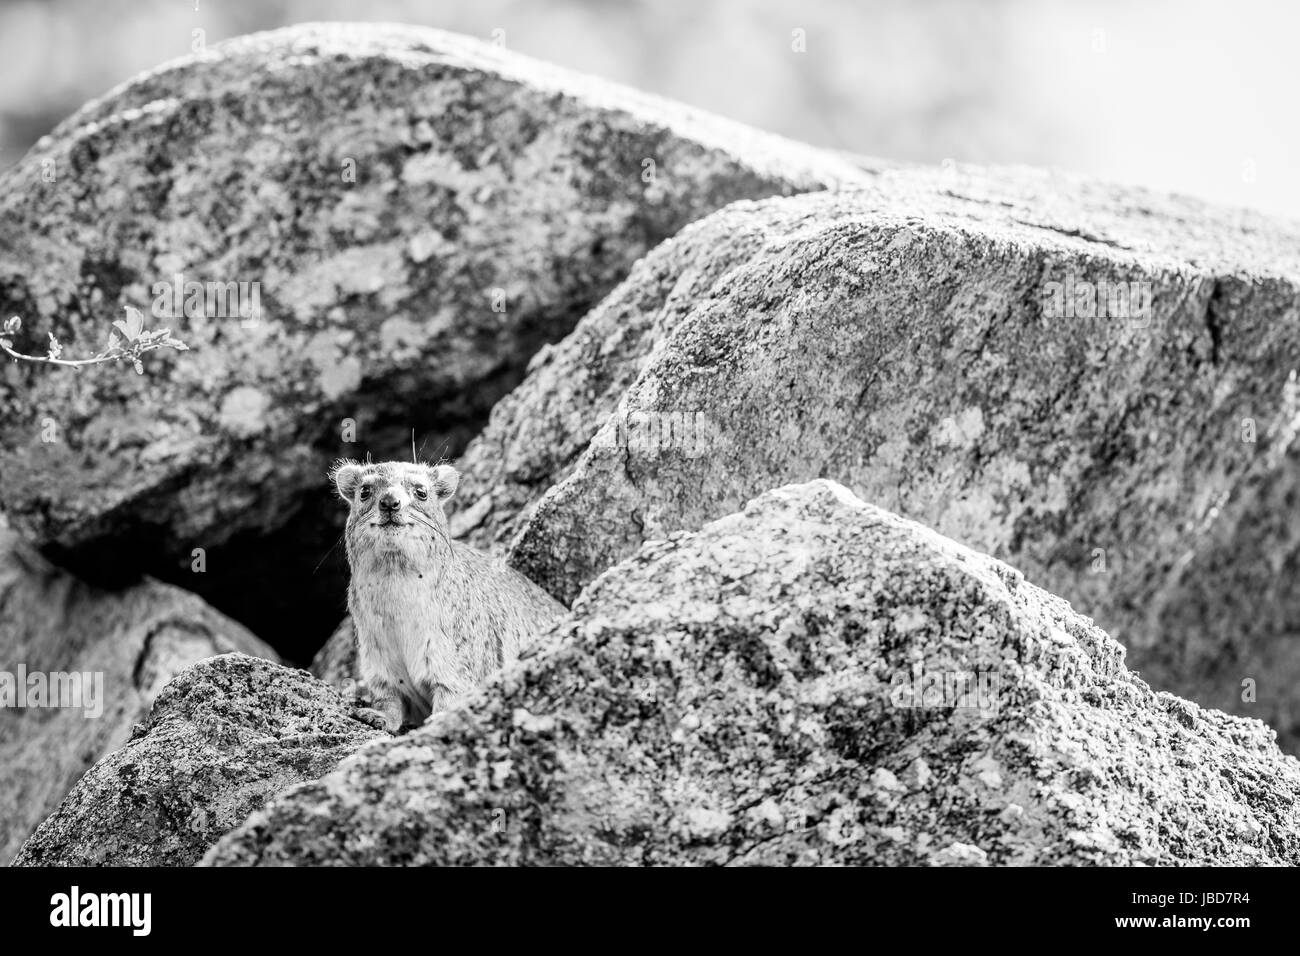 Rock hyrax basking on the rocks in black and white in Hwange National Park, Zimbabwe. Stock Photo